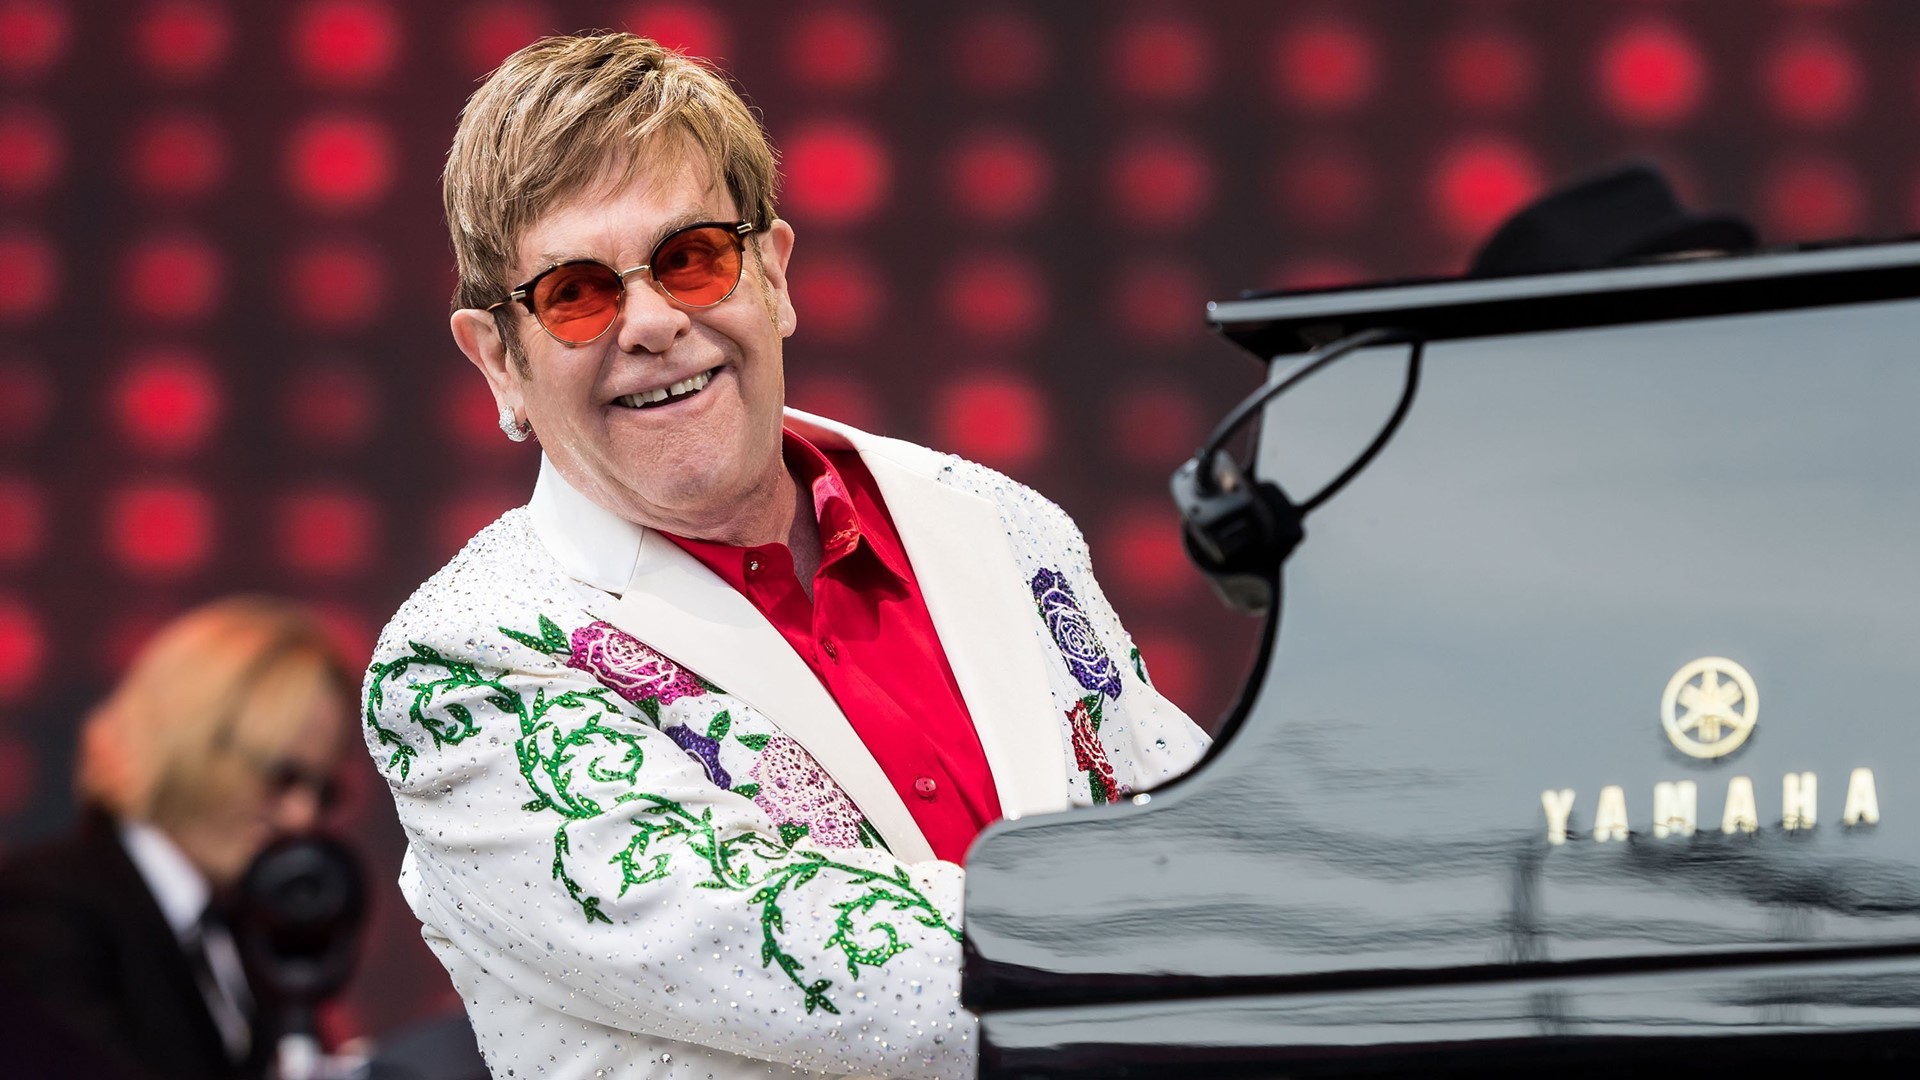 Elton John to delay concert in Hershey until April 2022